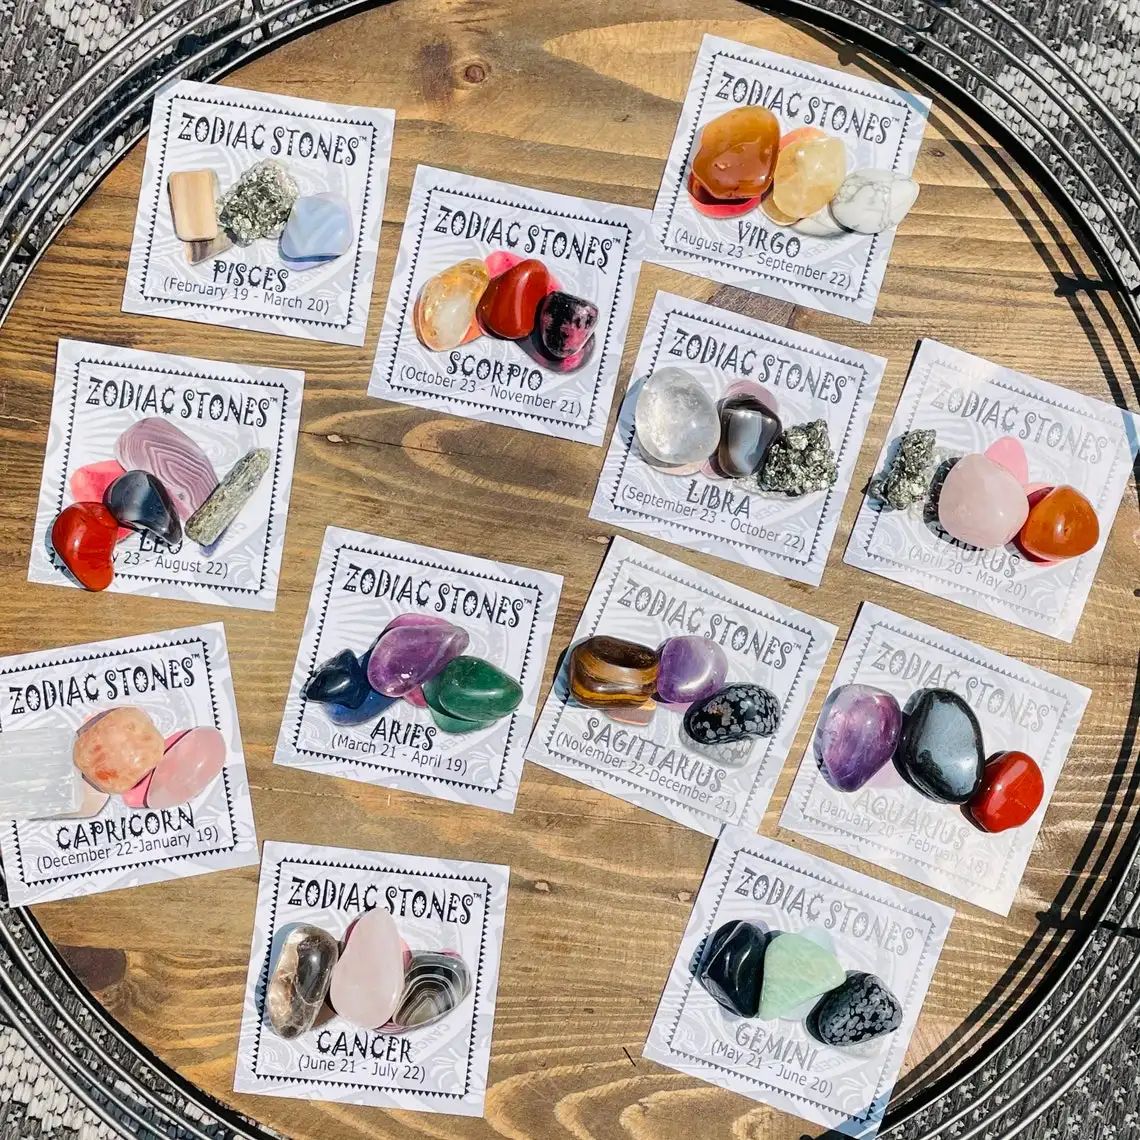 Customize Zodiac Stone Gemstone Healing Crystals Tumbled Stone Set for Gift and Birthstone Reiki Chakra